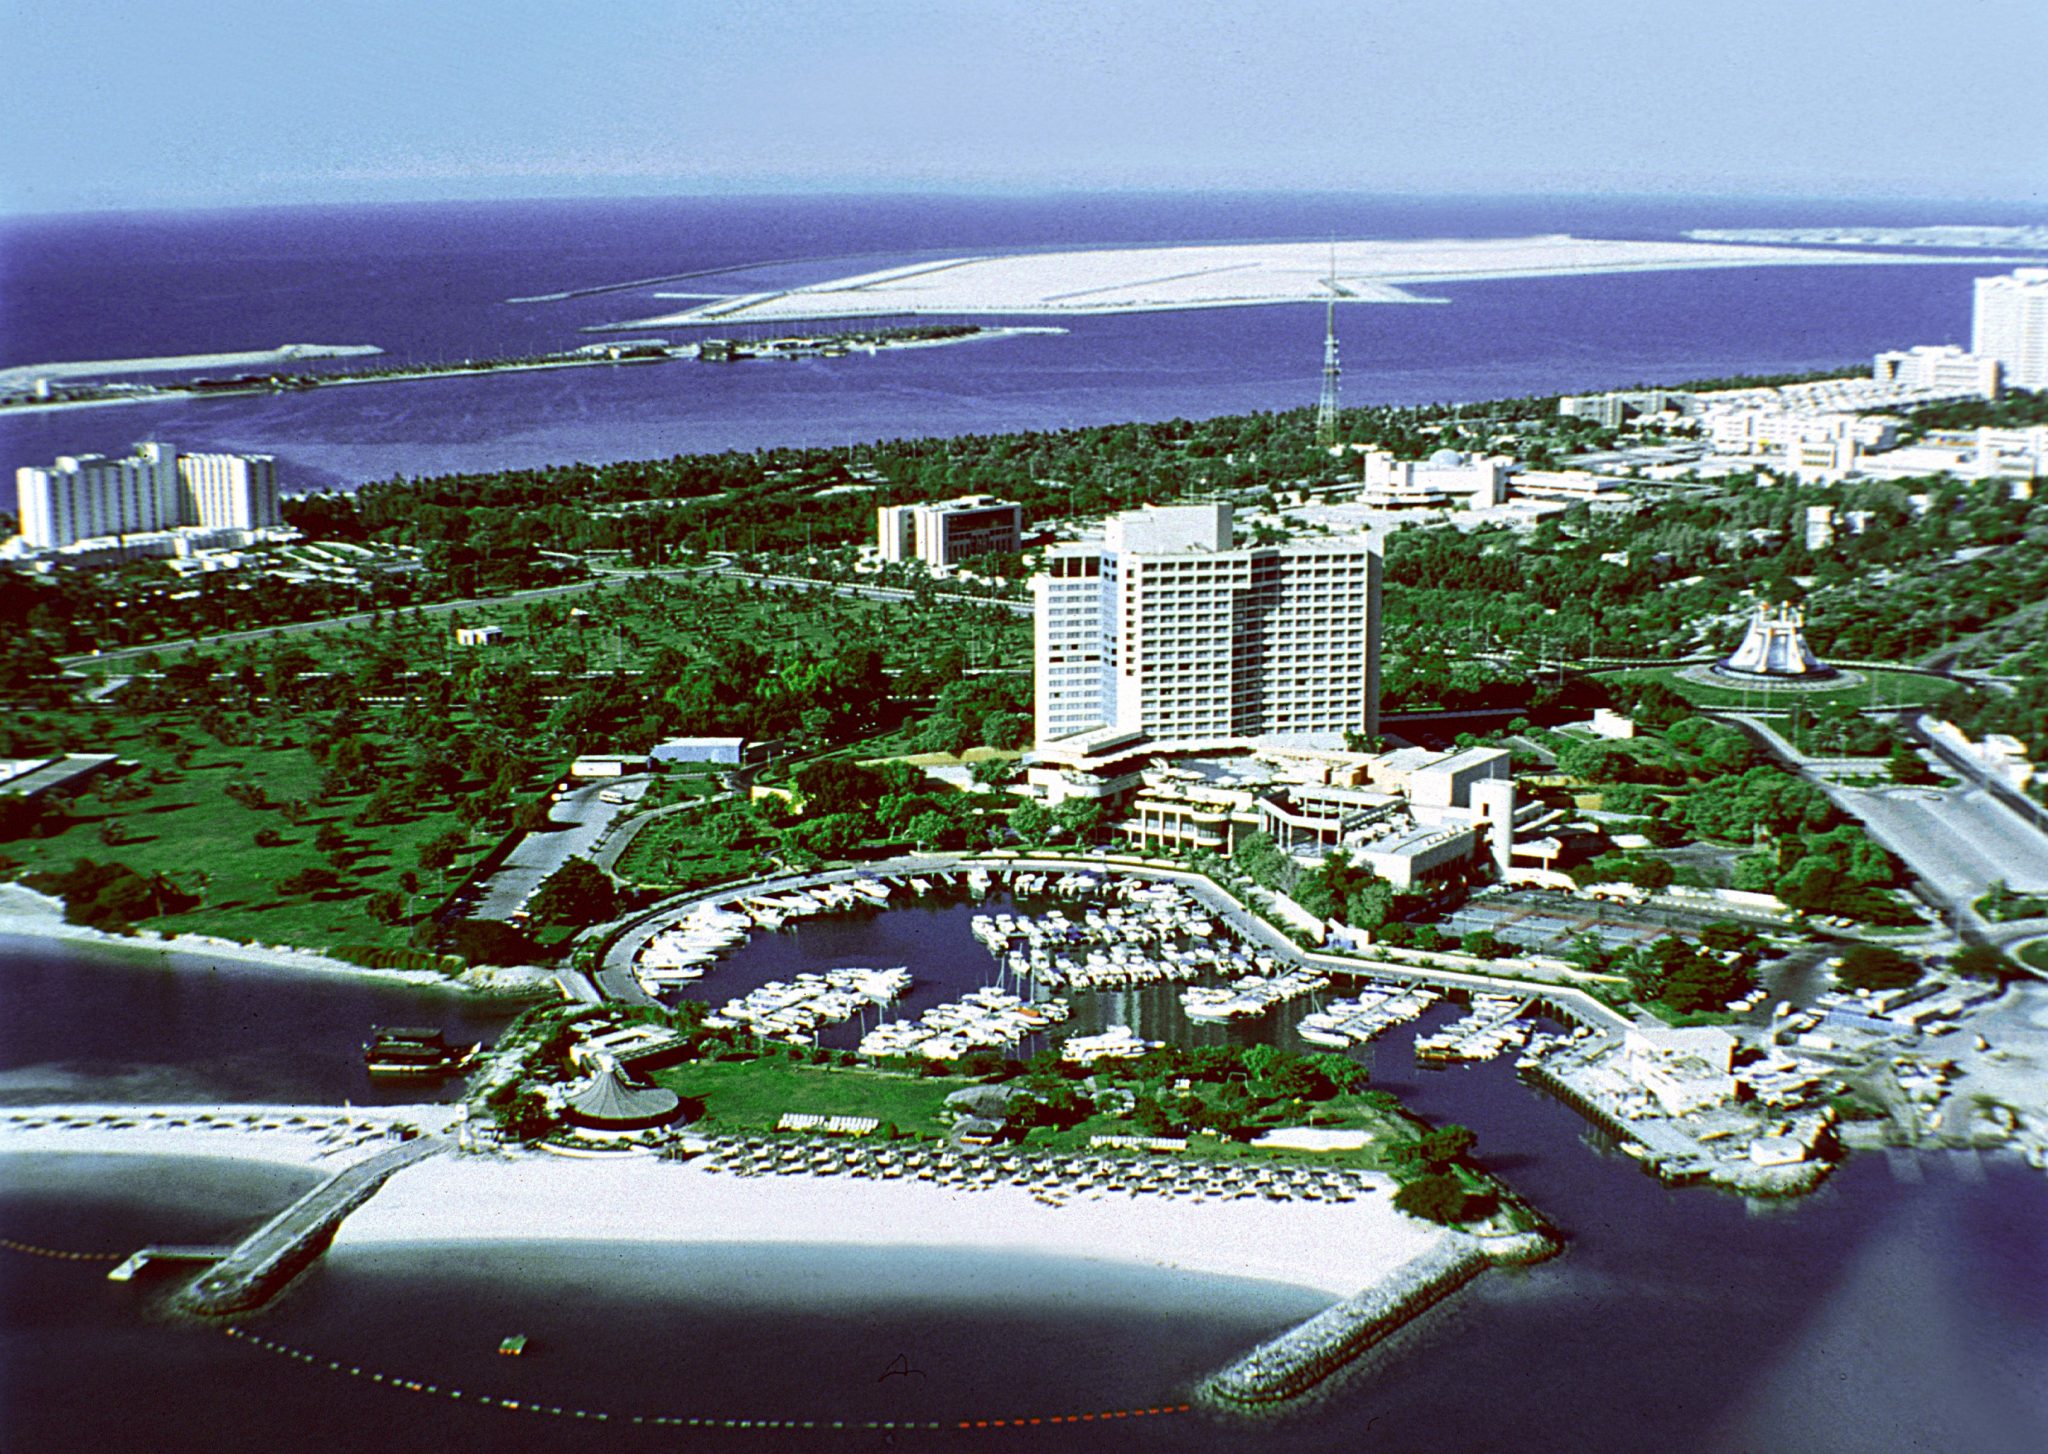 InterContinental Abu Dhabi Hotel Marina 2048x1454 